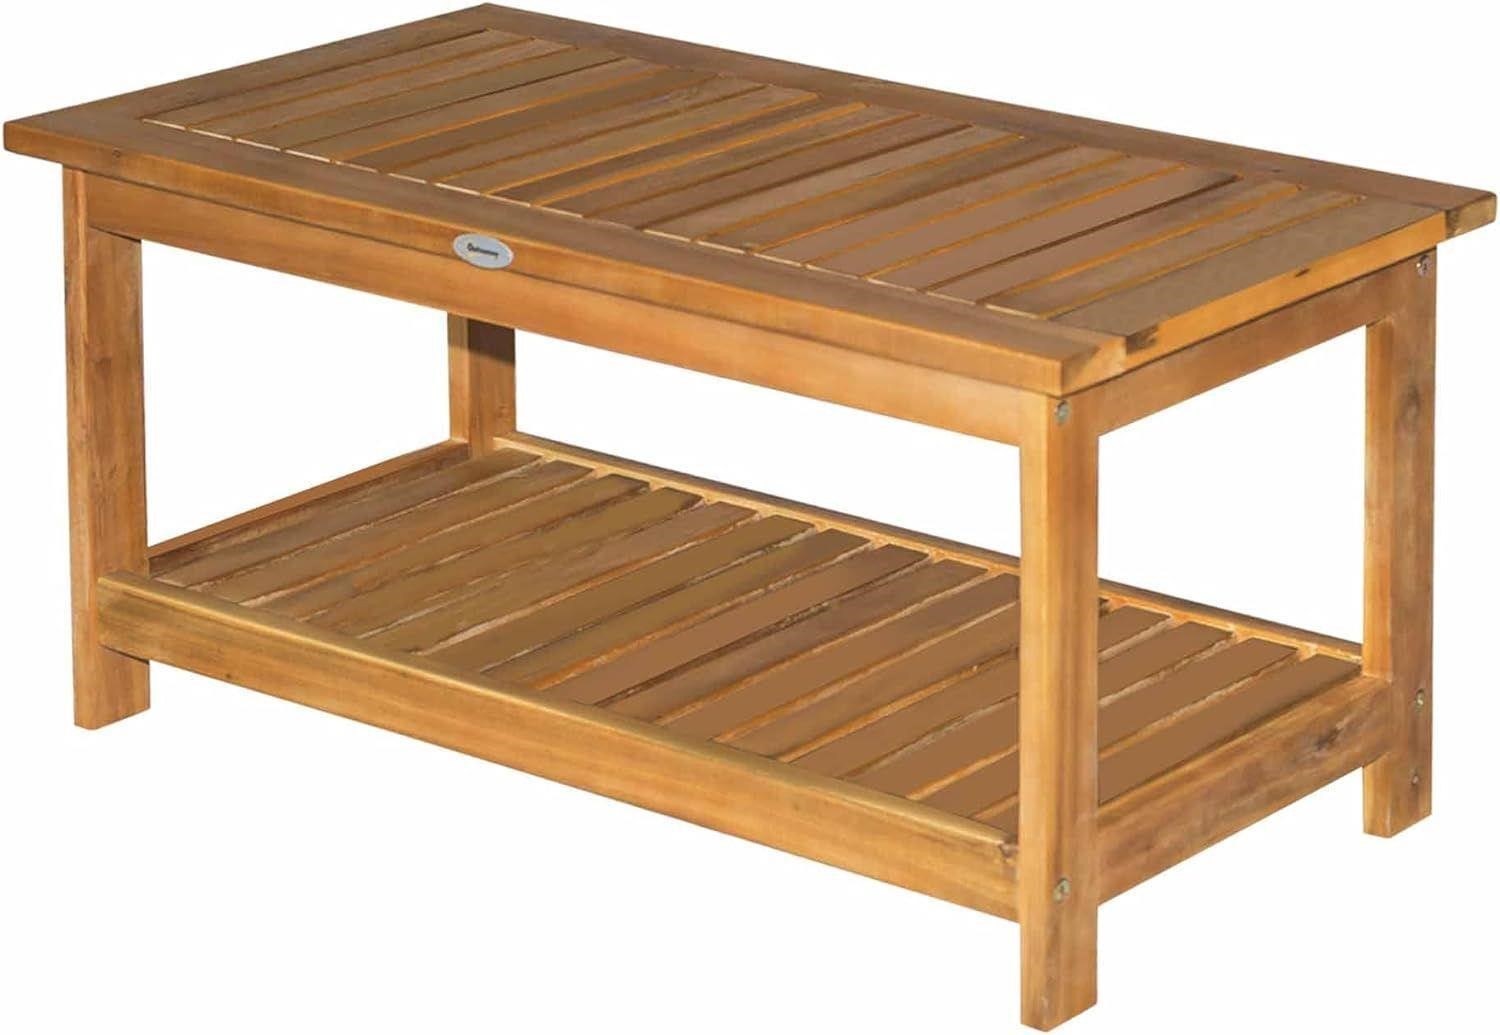 36" Outdoor Coffee Table 2-Shelf Acacia Wood